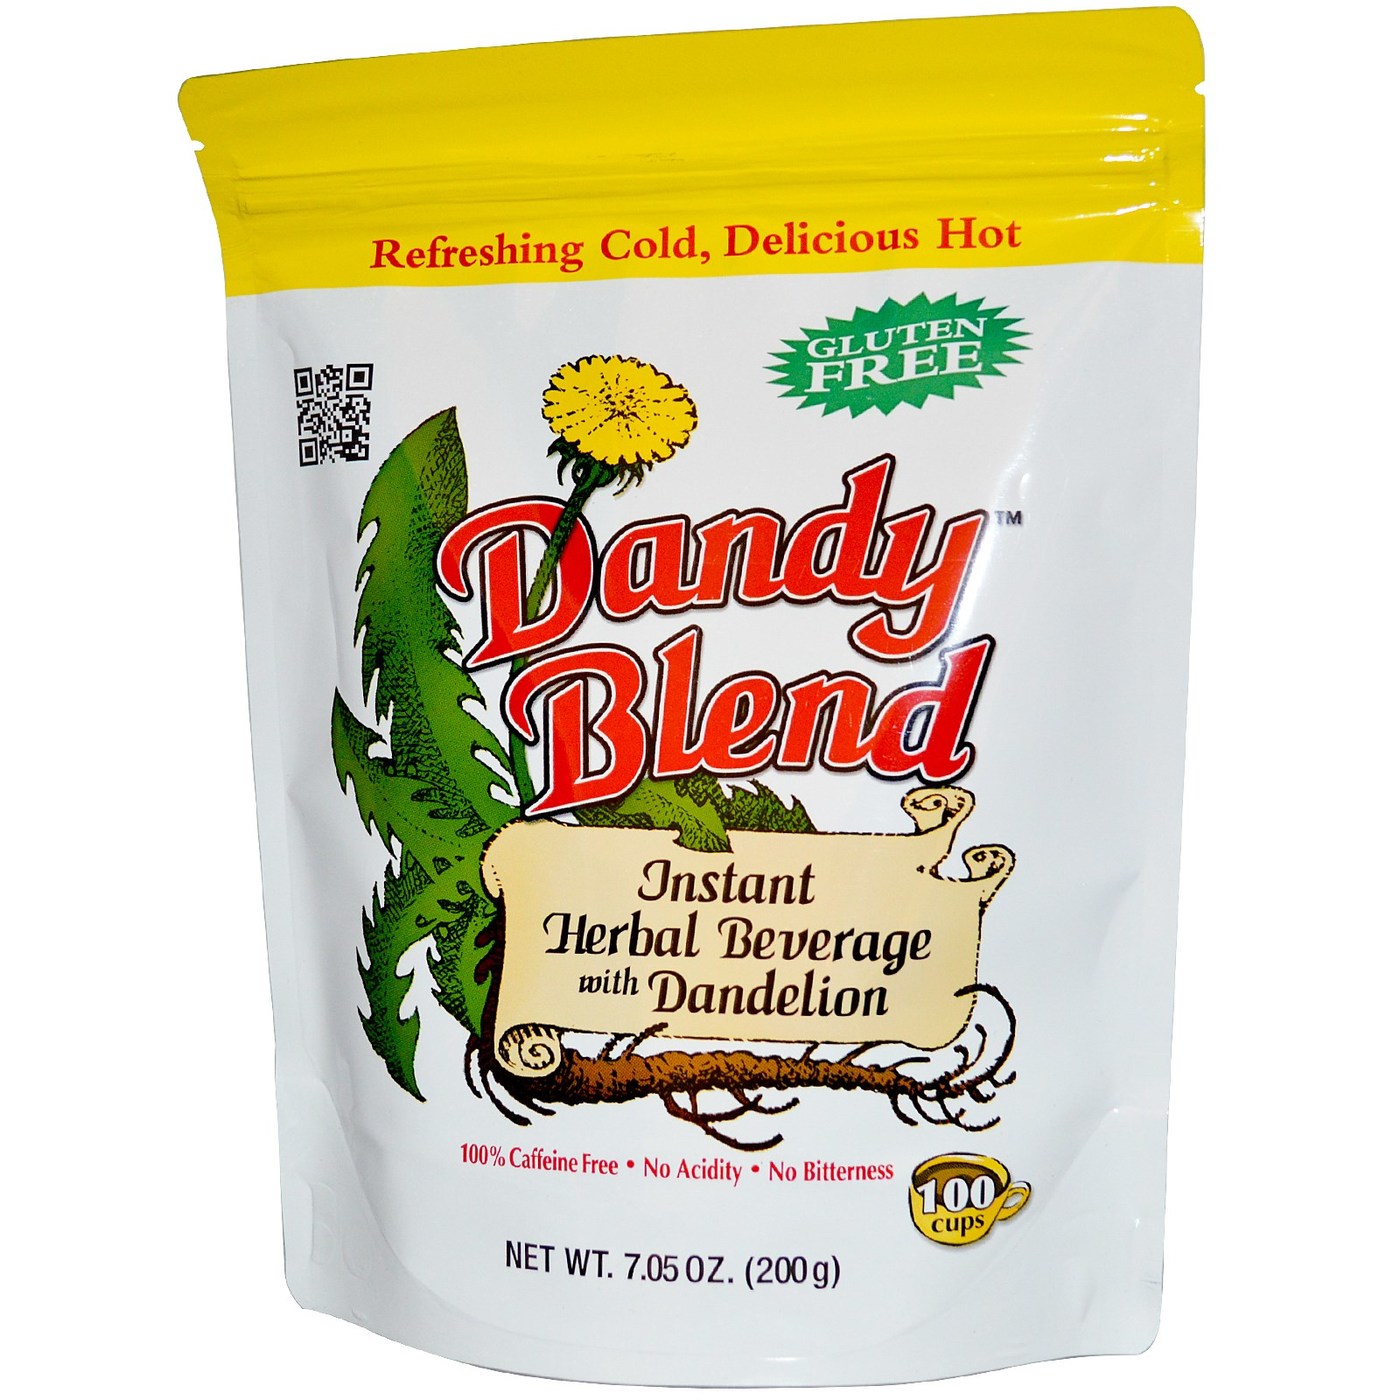 Dandy Blend Organic Instant Herbal Beverage with Dandelion, (156